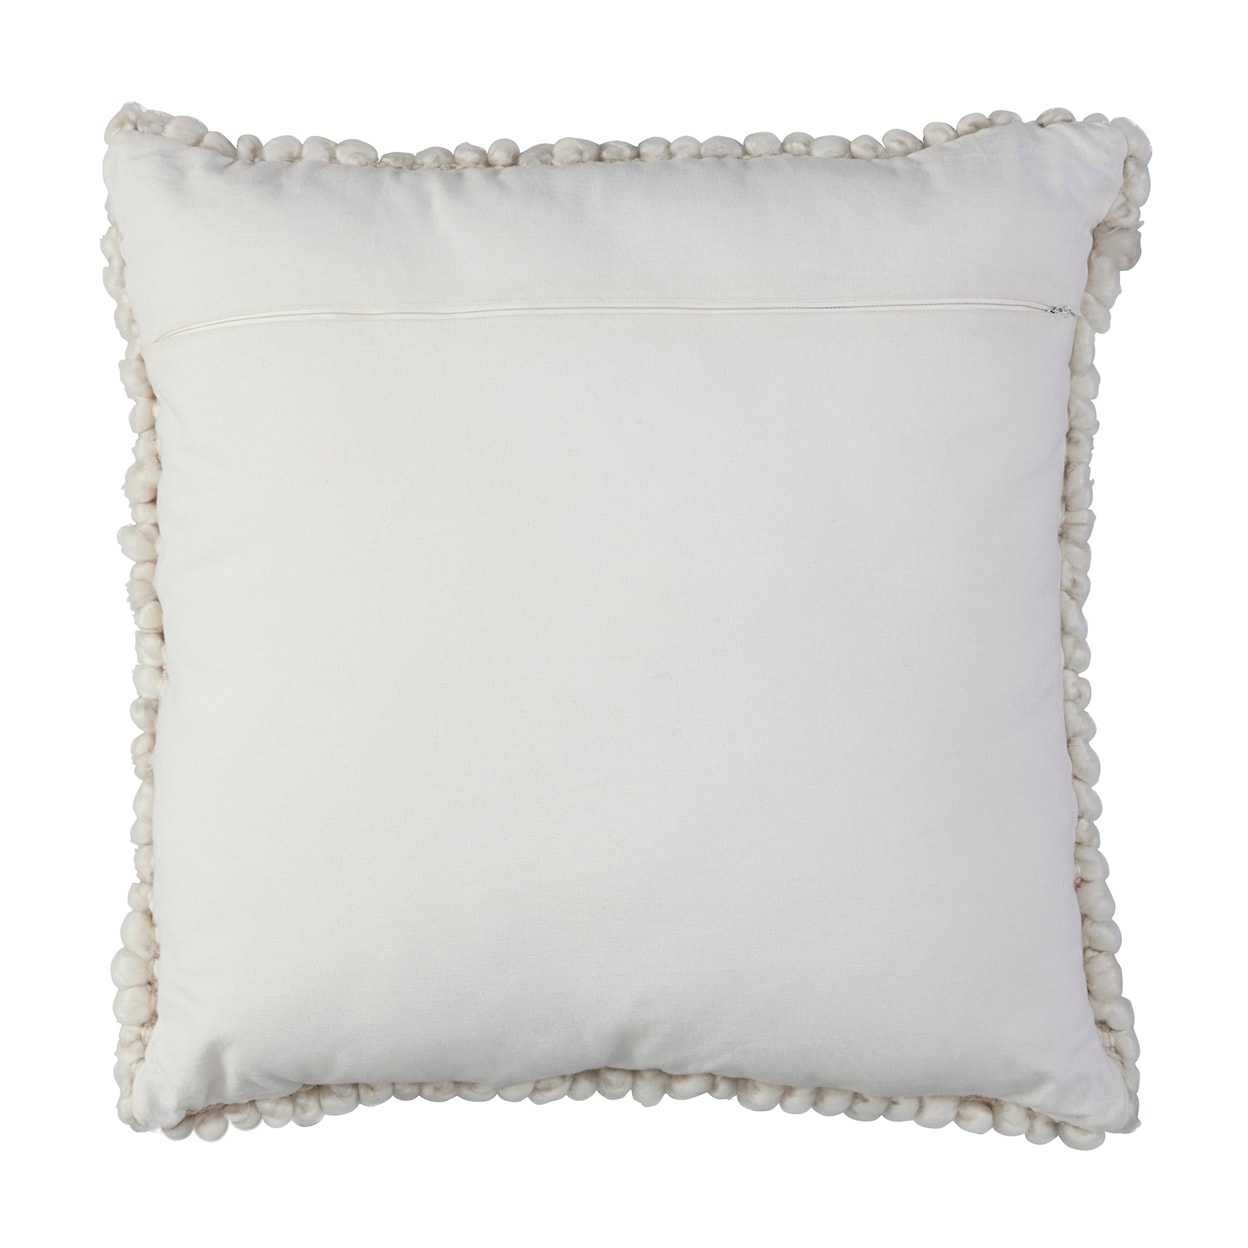 Benchcraft Aavie Aavie Ivory Pillow